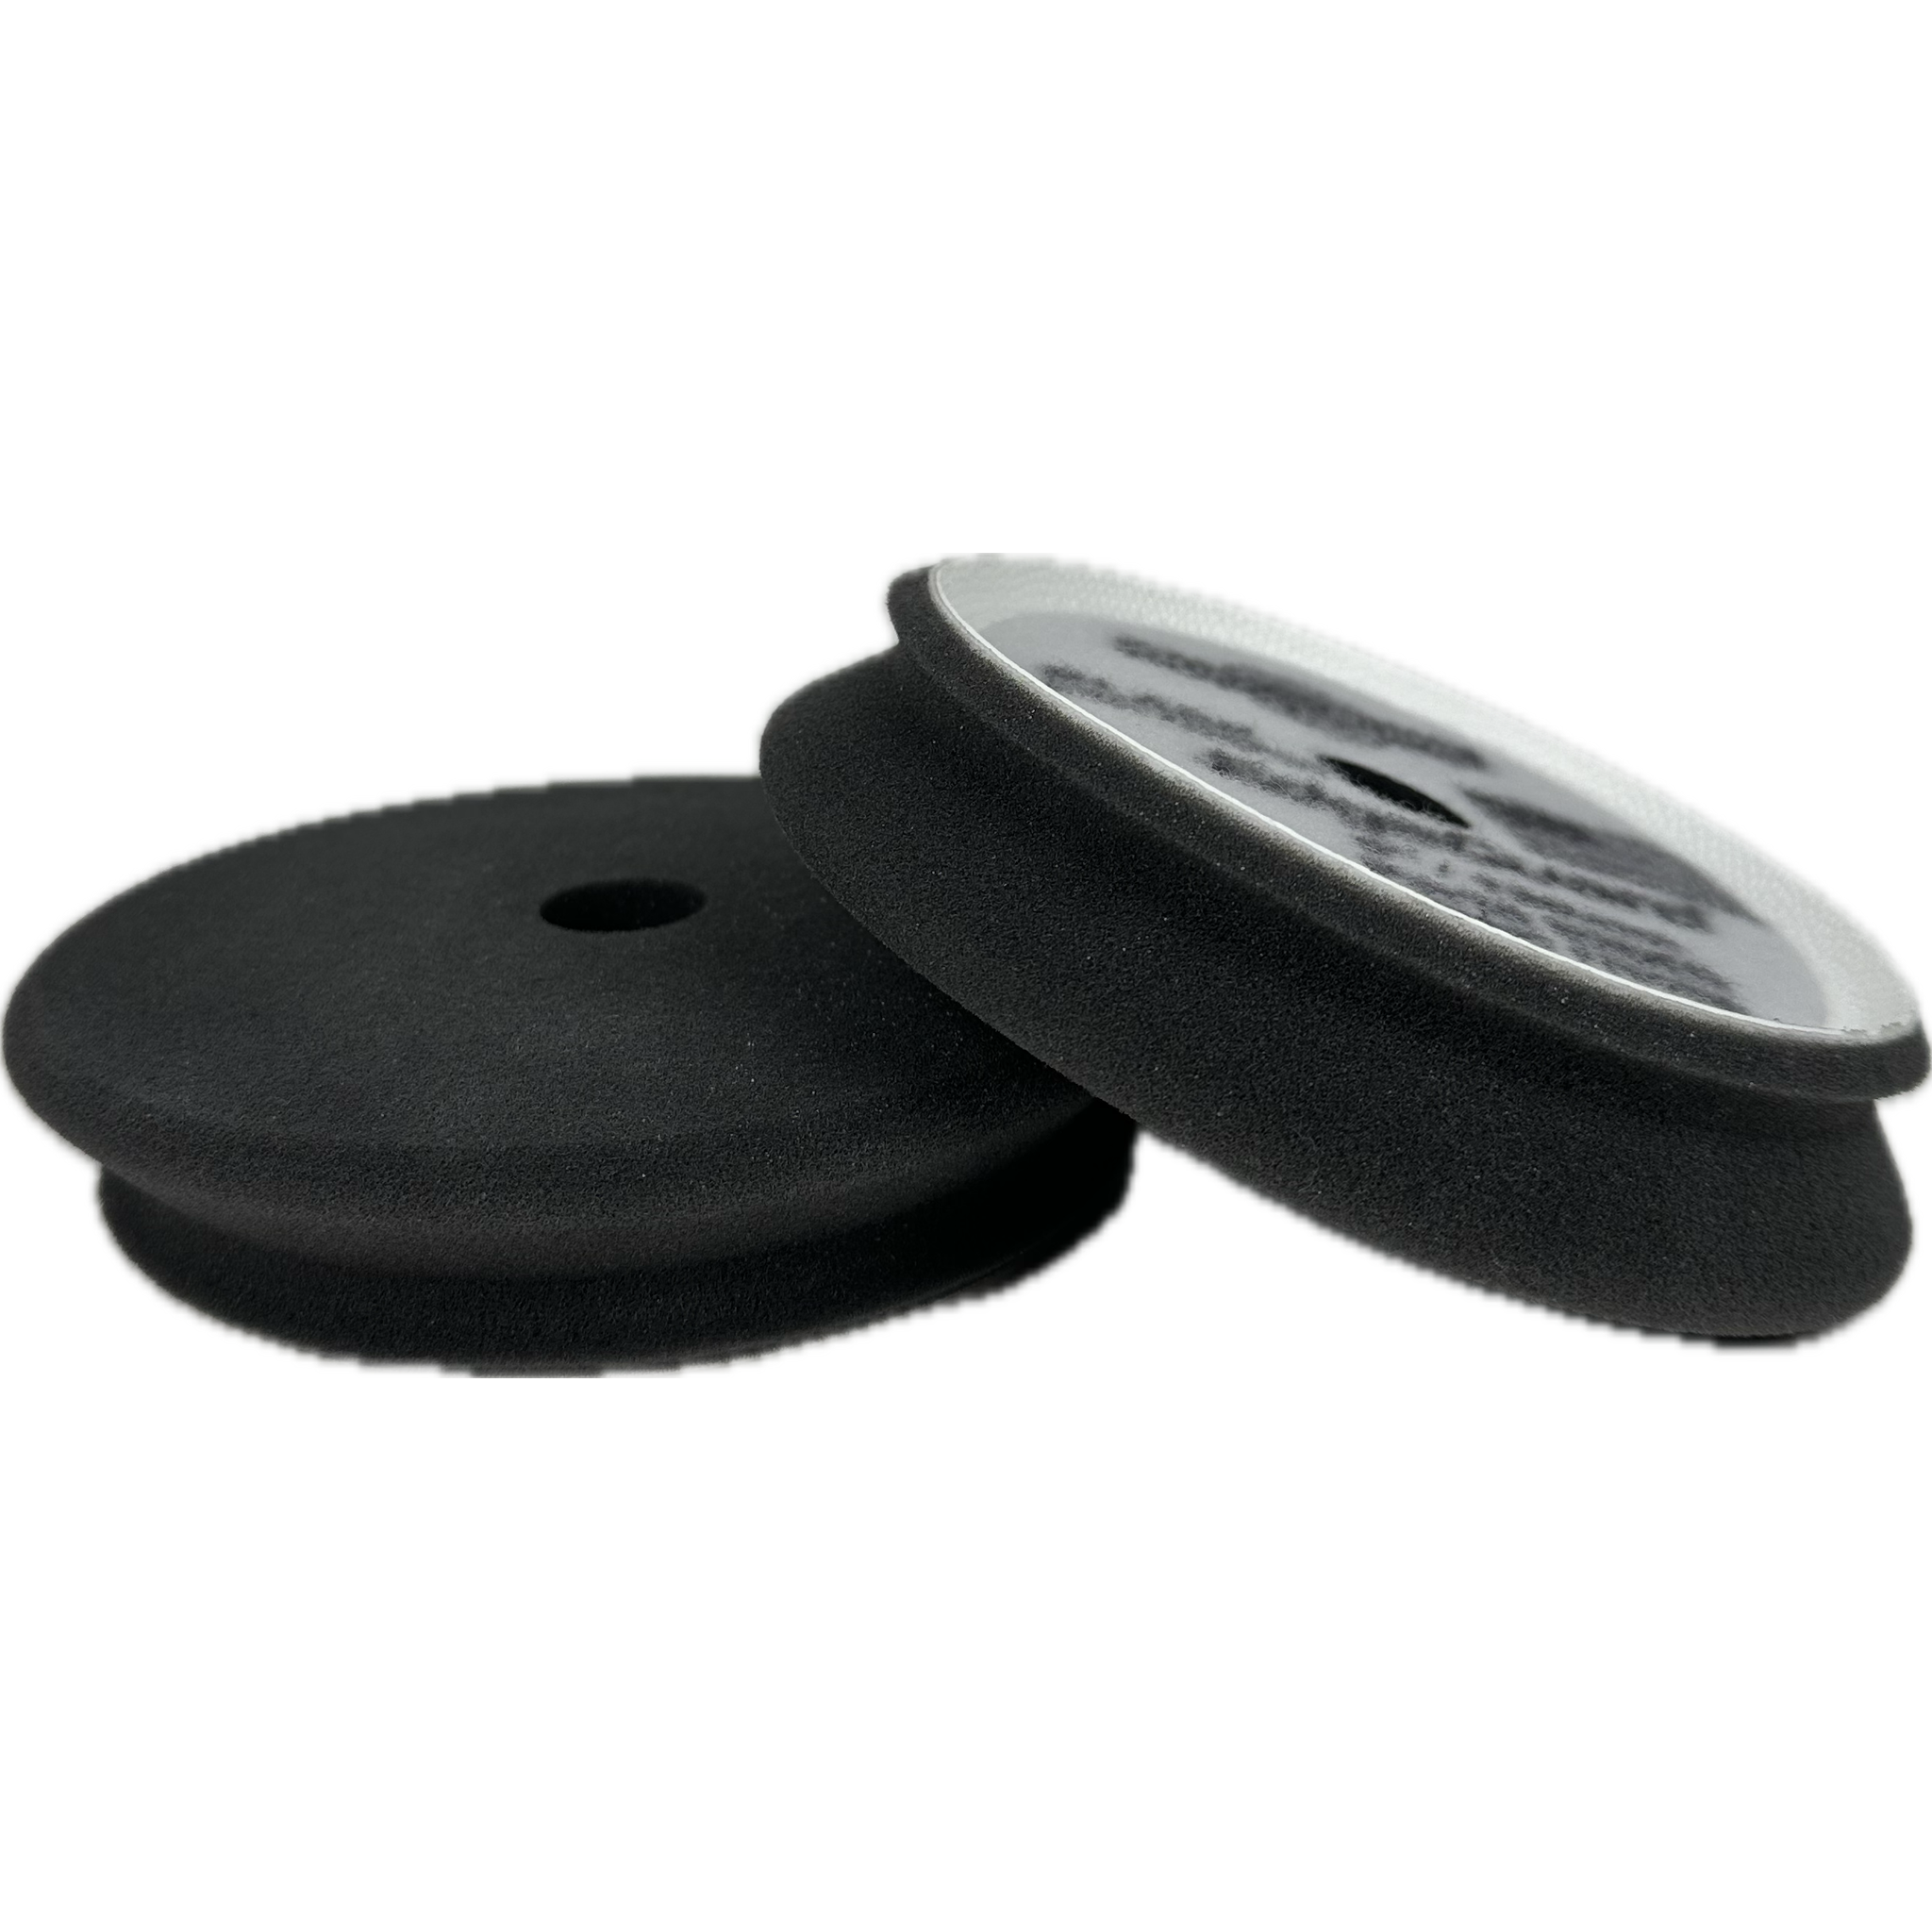 Edg Foam Pad, Black, Finishing, 5" / 130mm (2 pack)